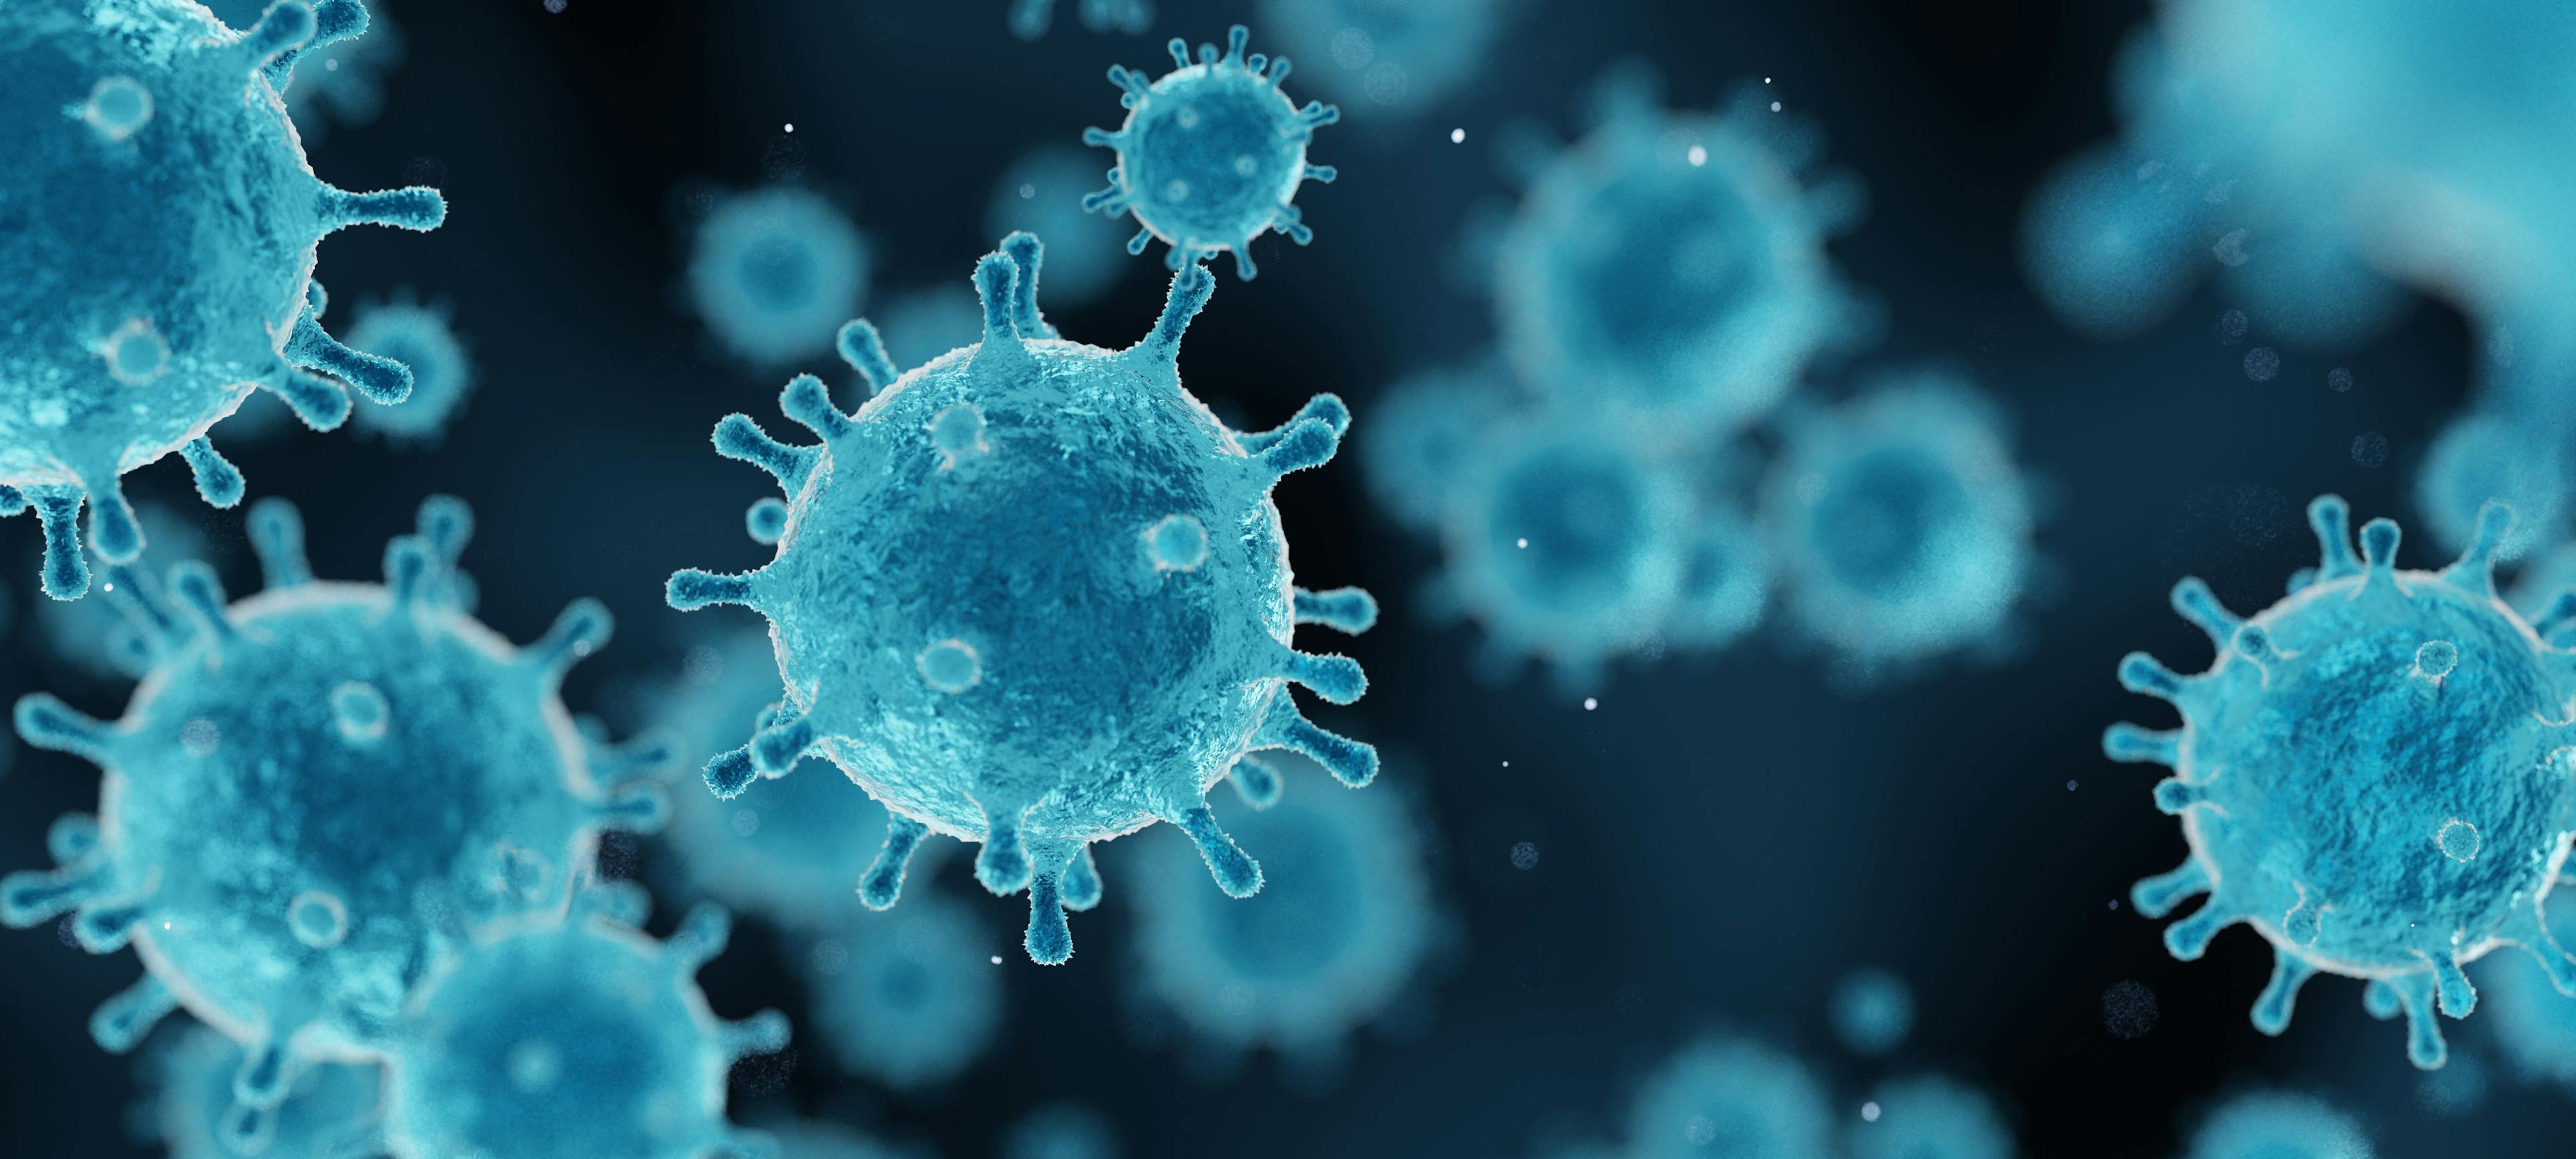 corona virus 2019-ncov flu outbreak, covid-19 3d banner illustration, microscopic view of floating influenza virus cells | Image Credit: CREATIVE WONDER - stock.adobe.com